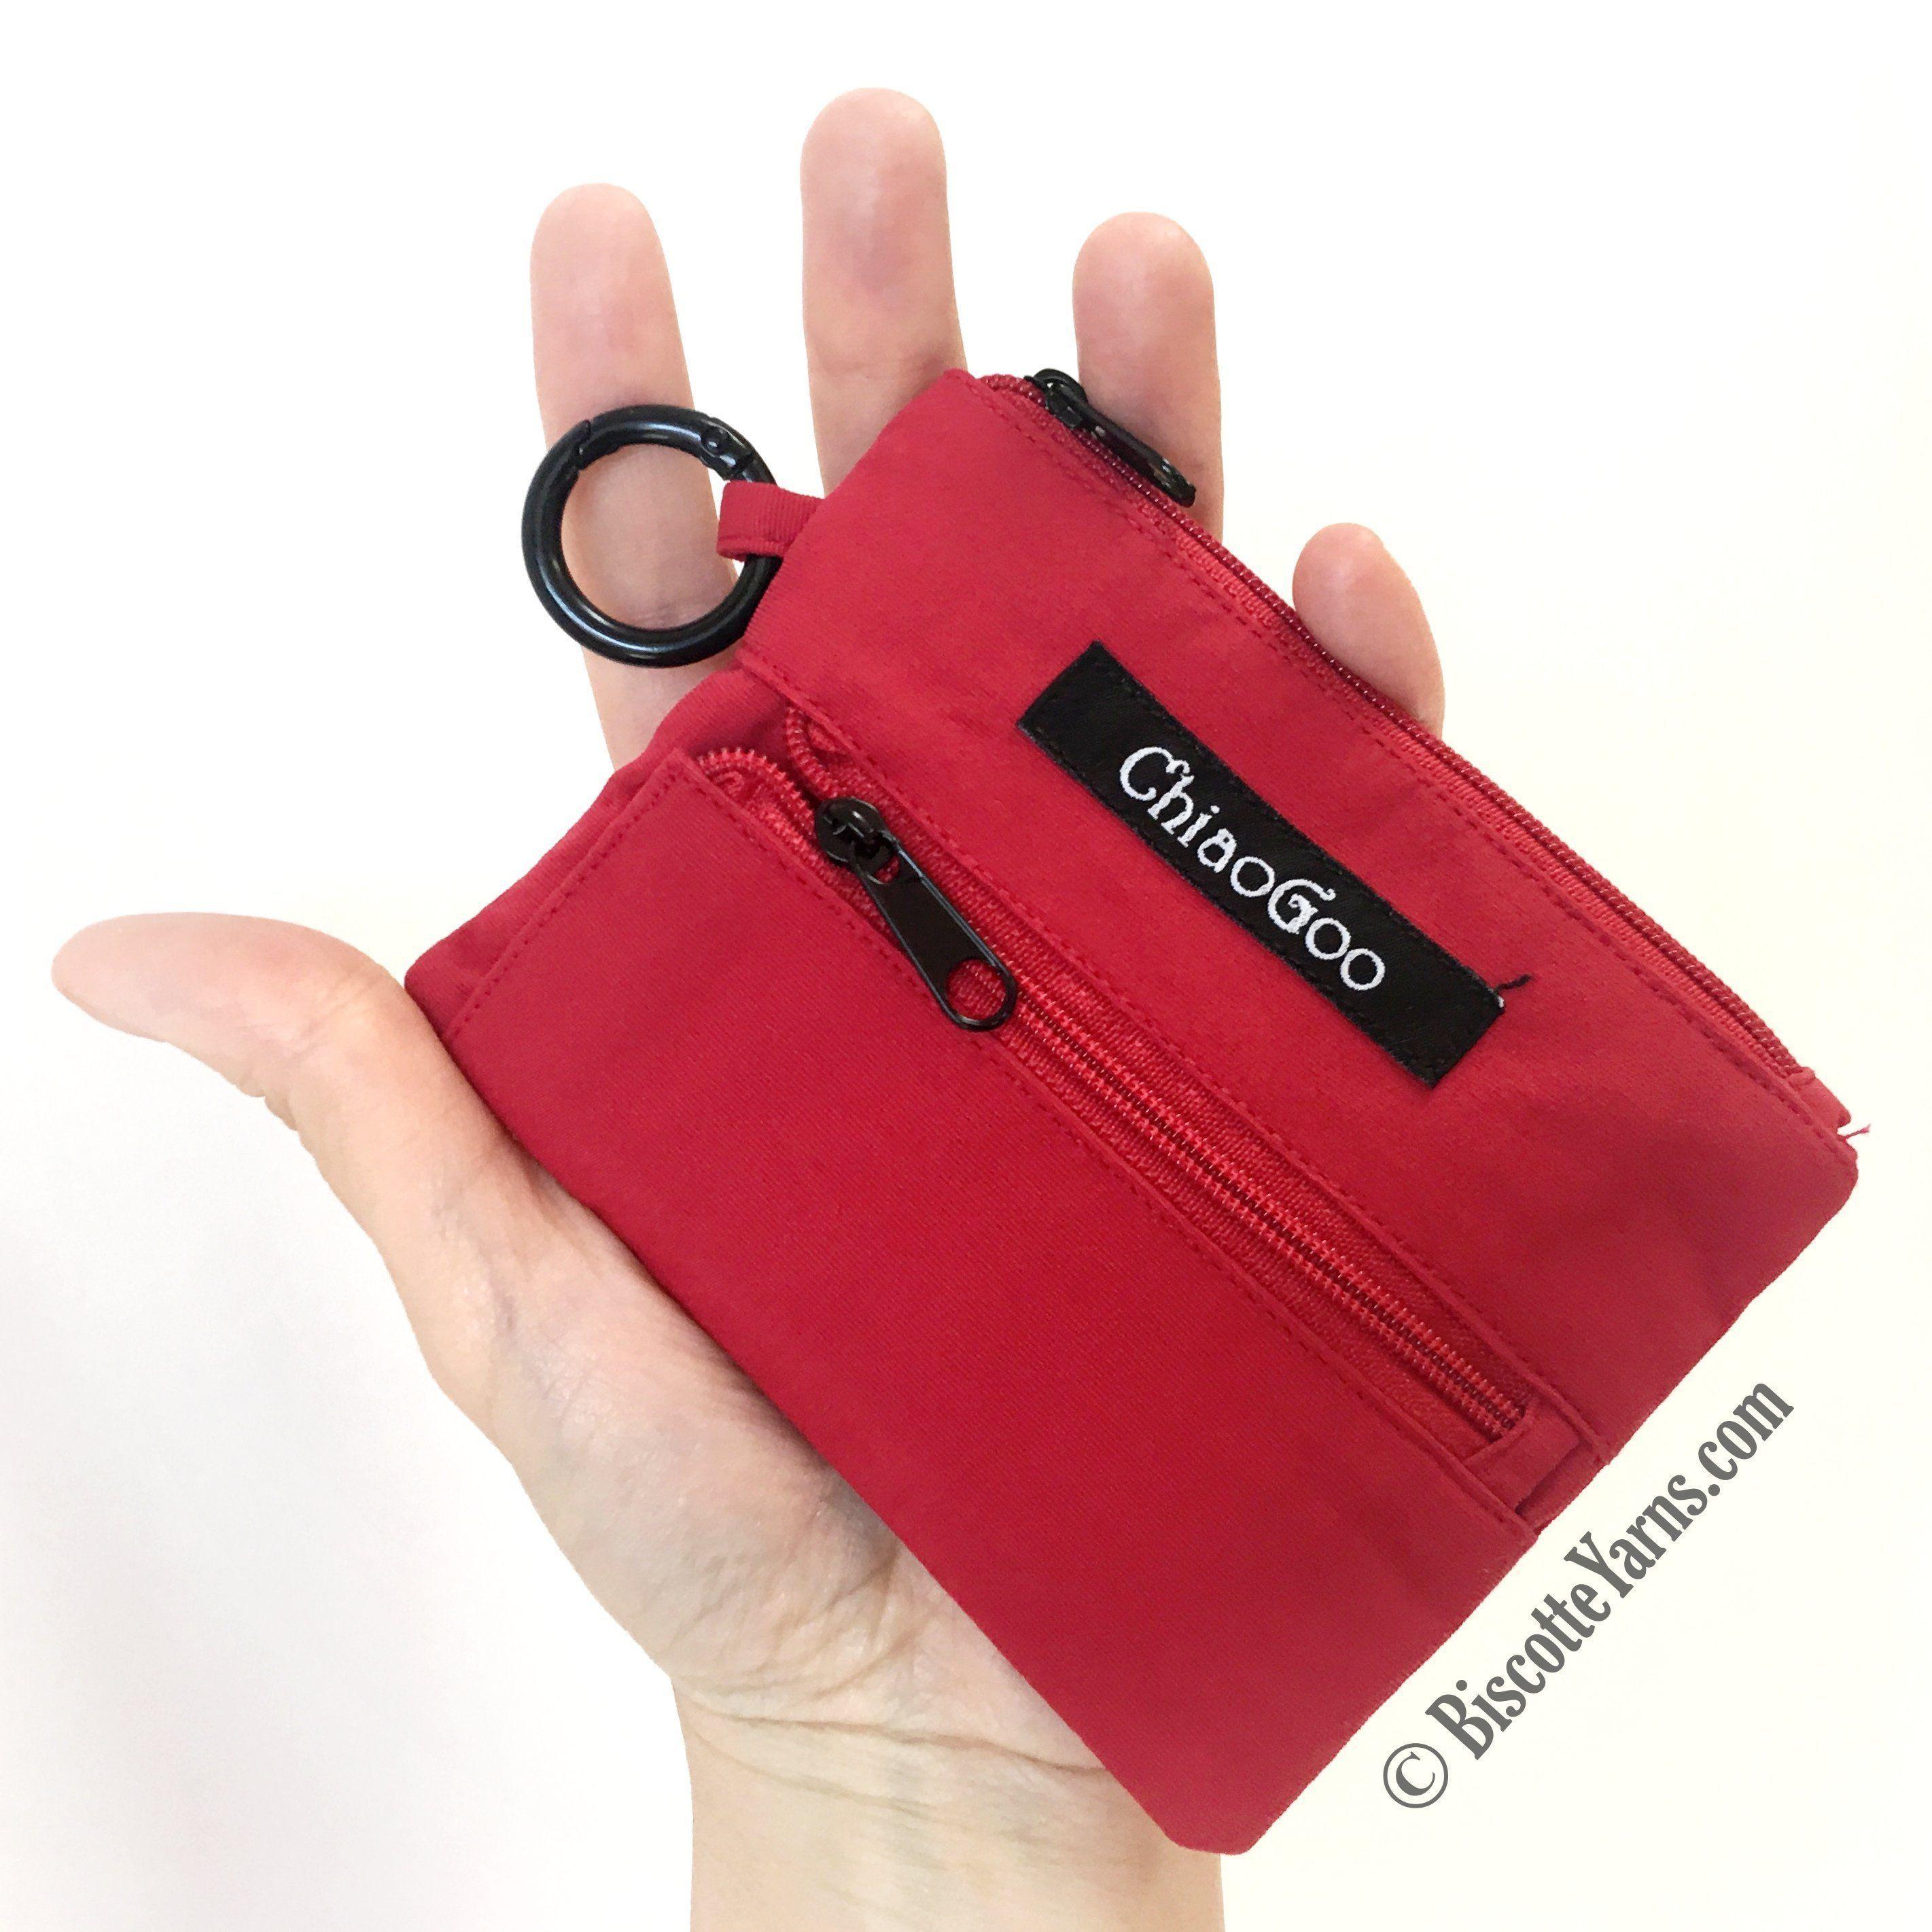 ChiaoGoo TWIST Red Lace Interchangeable Sets Needles - 3 Shorties